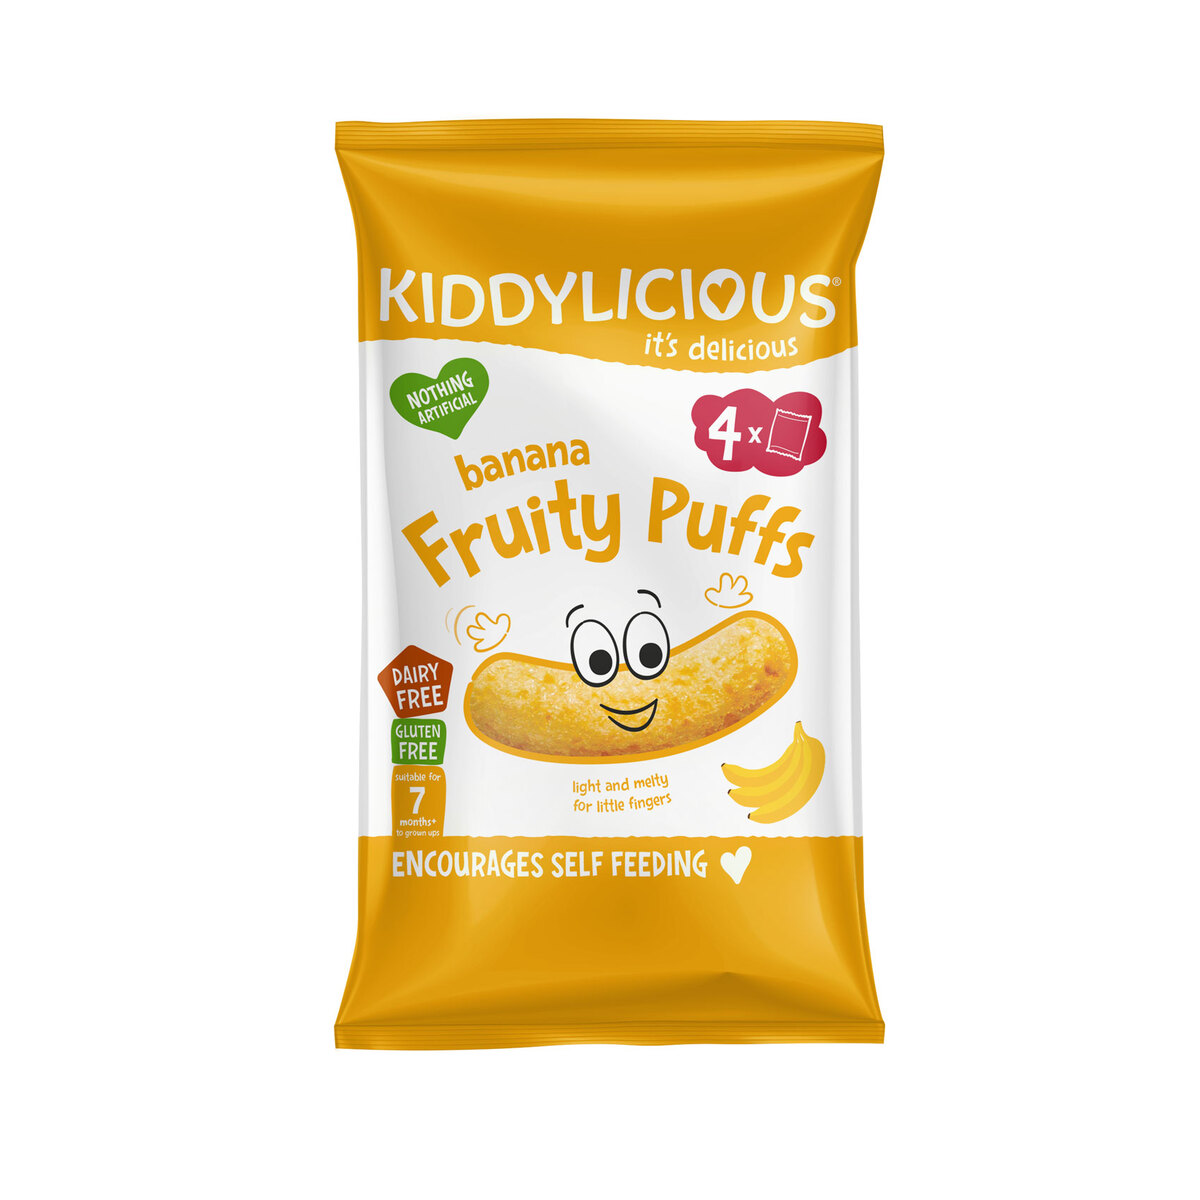 Kiddylicious Banana Fruity Puffs For 7 Months 4 x 10 g